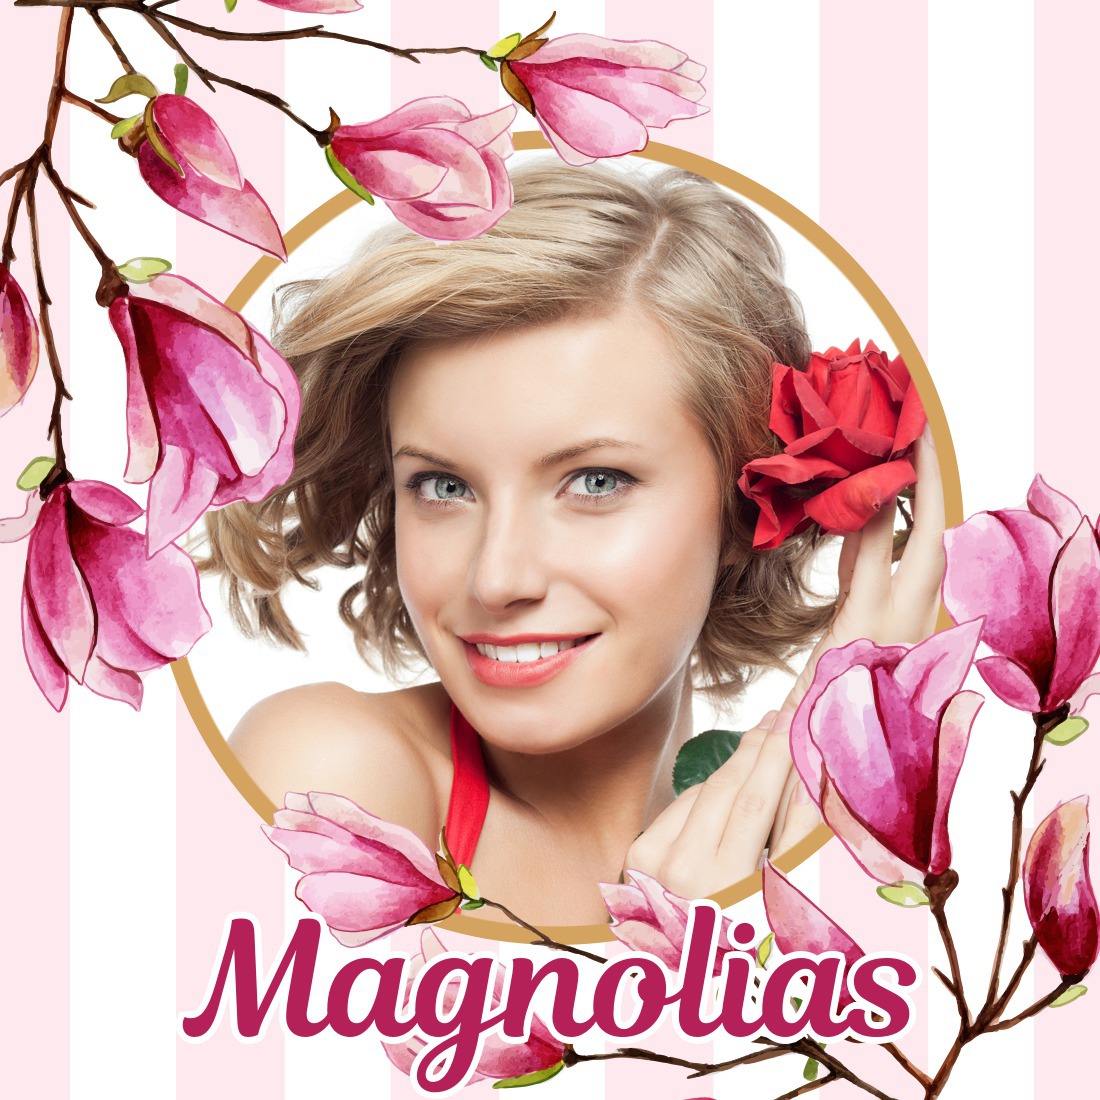 Magnolias Montage photo